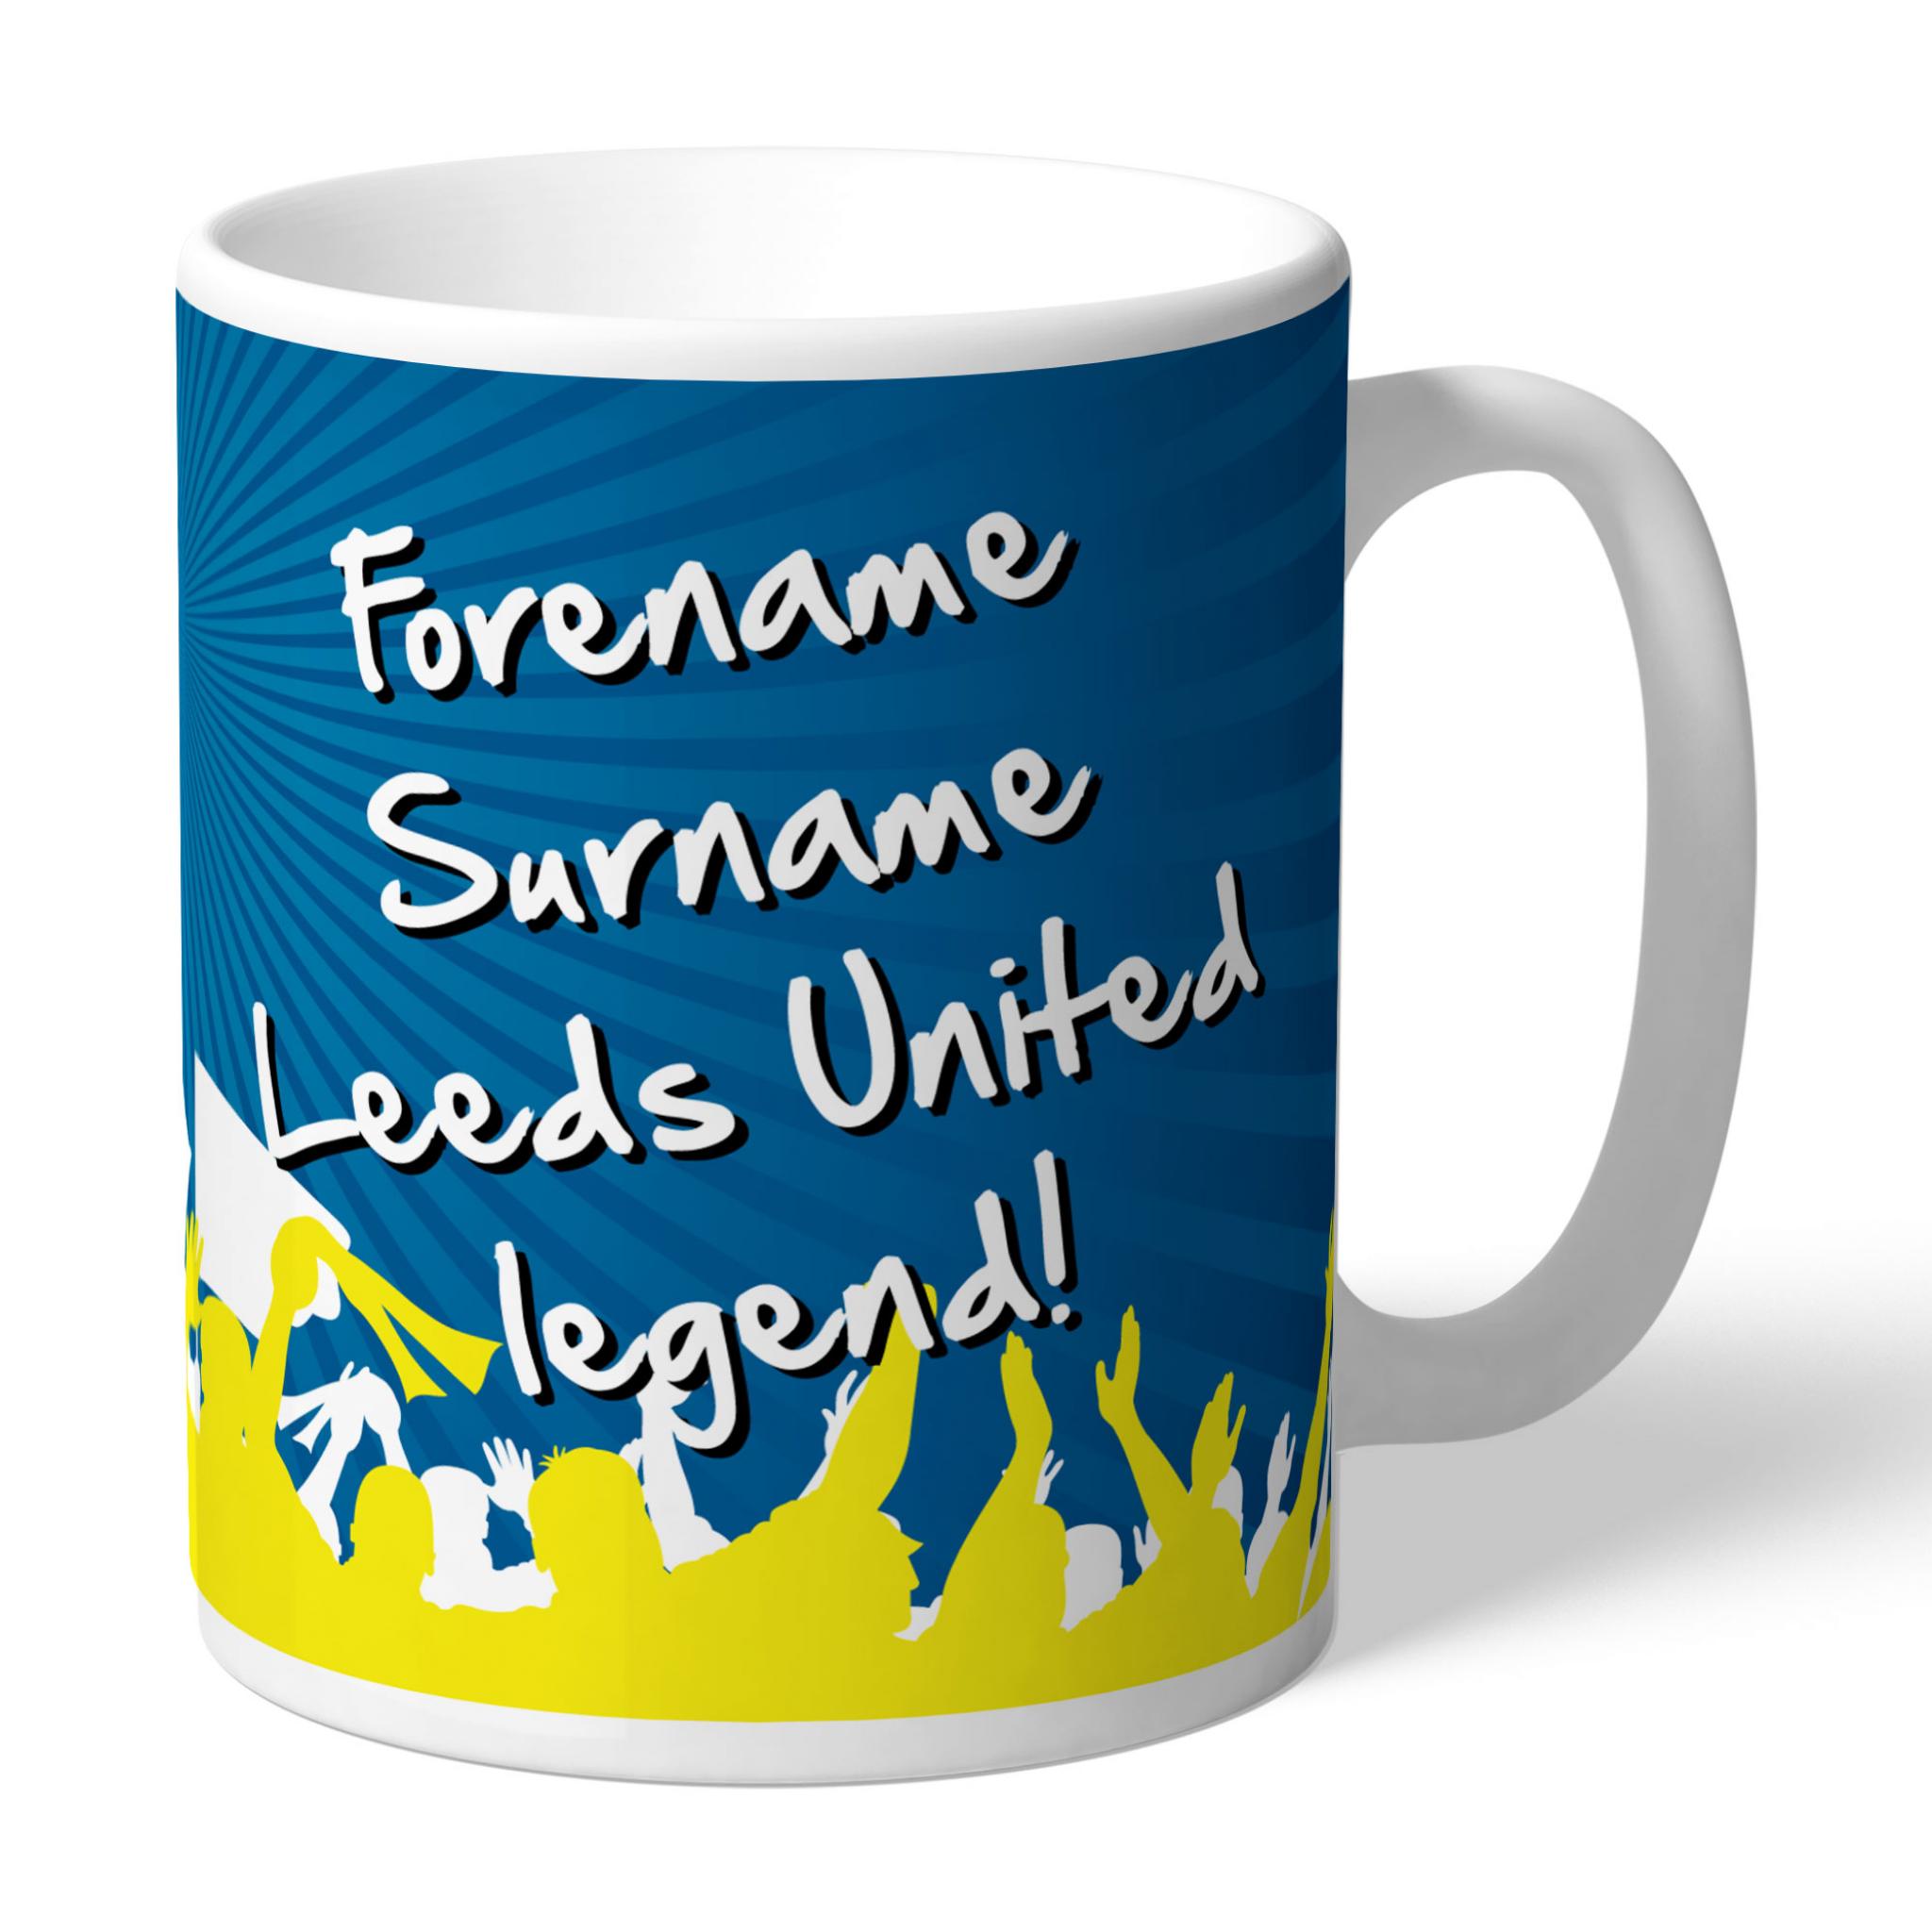 Personalised Official Leeds United FC Legend Mug